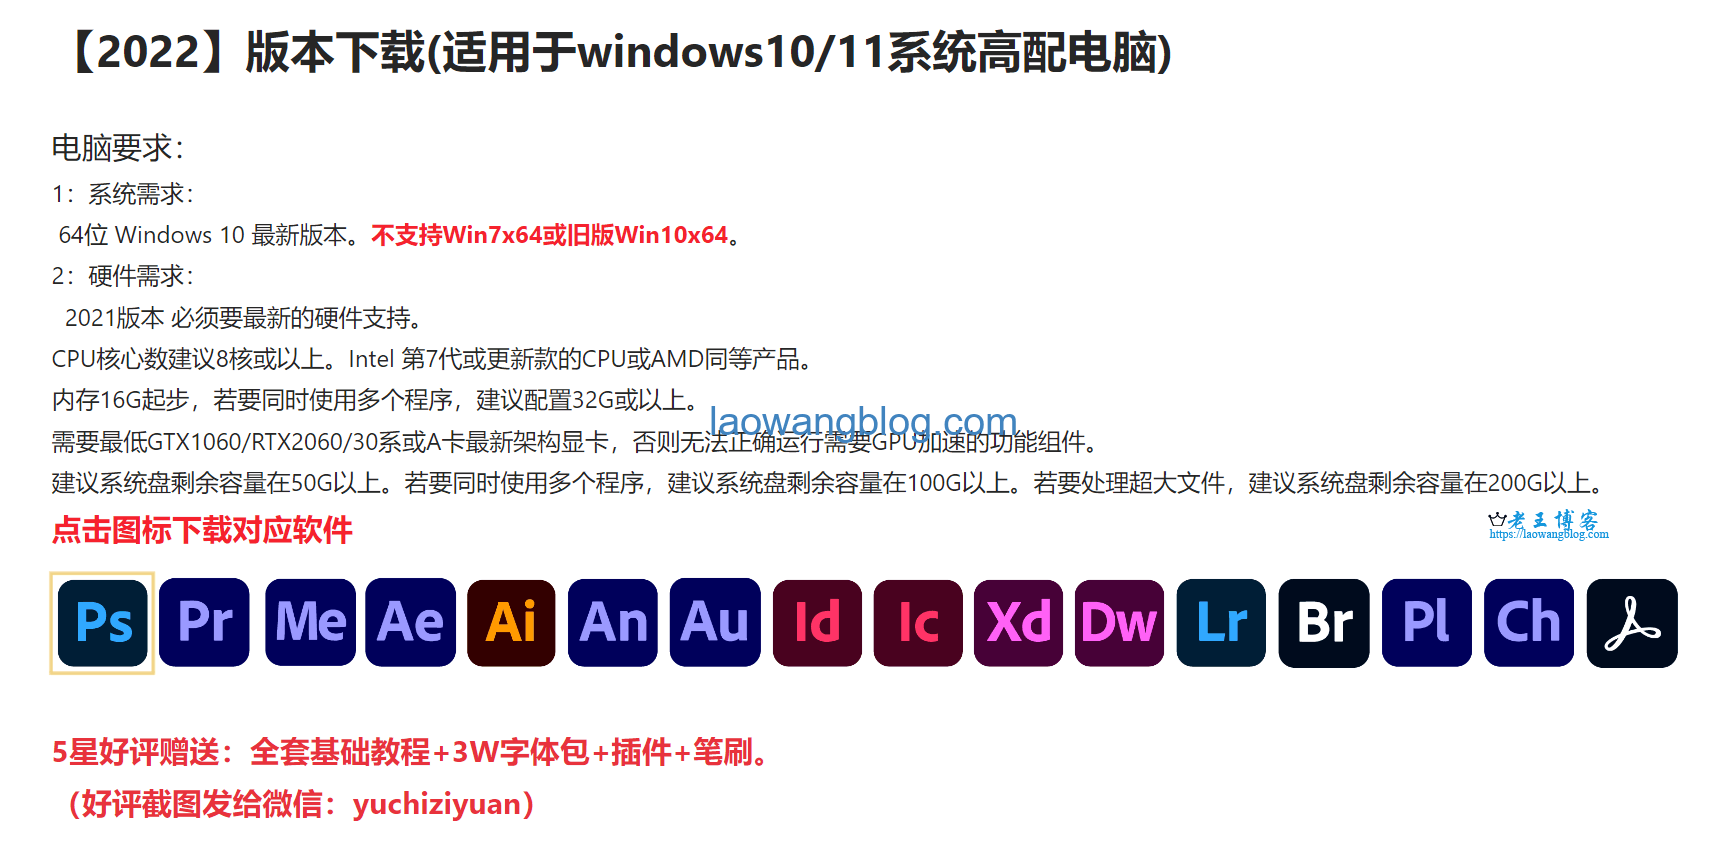 Adobe 全家桶 Windows 破解版